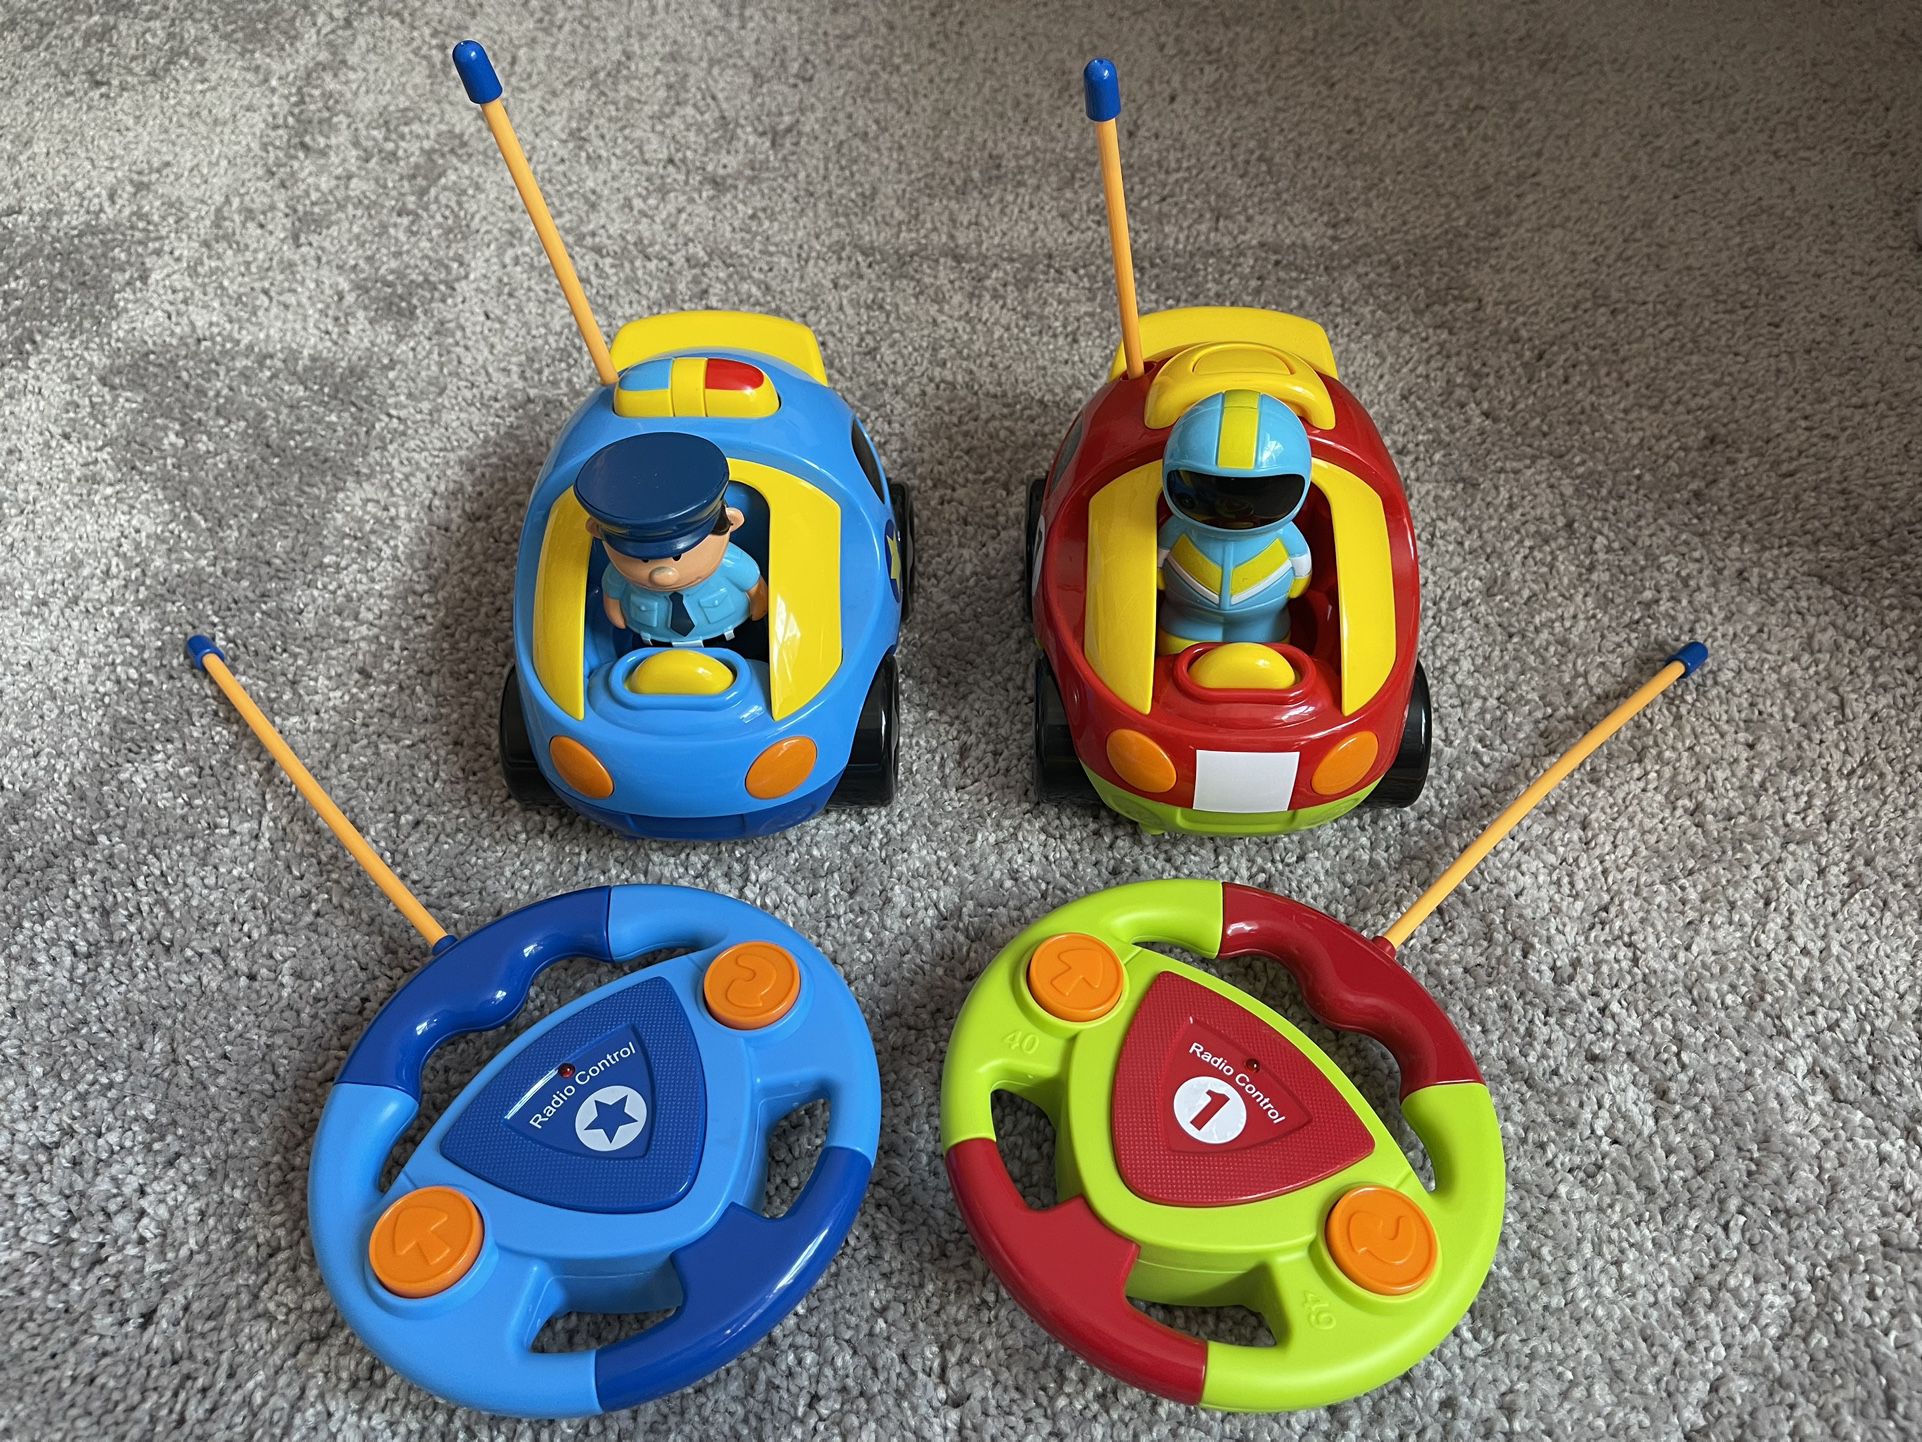 Remote Control Car Toys